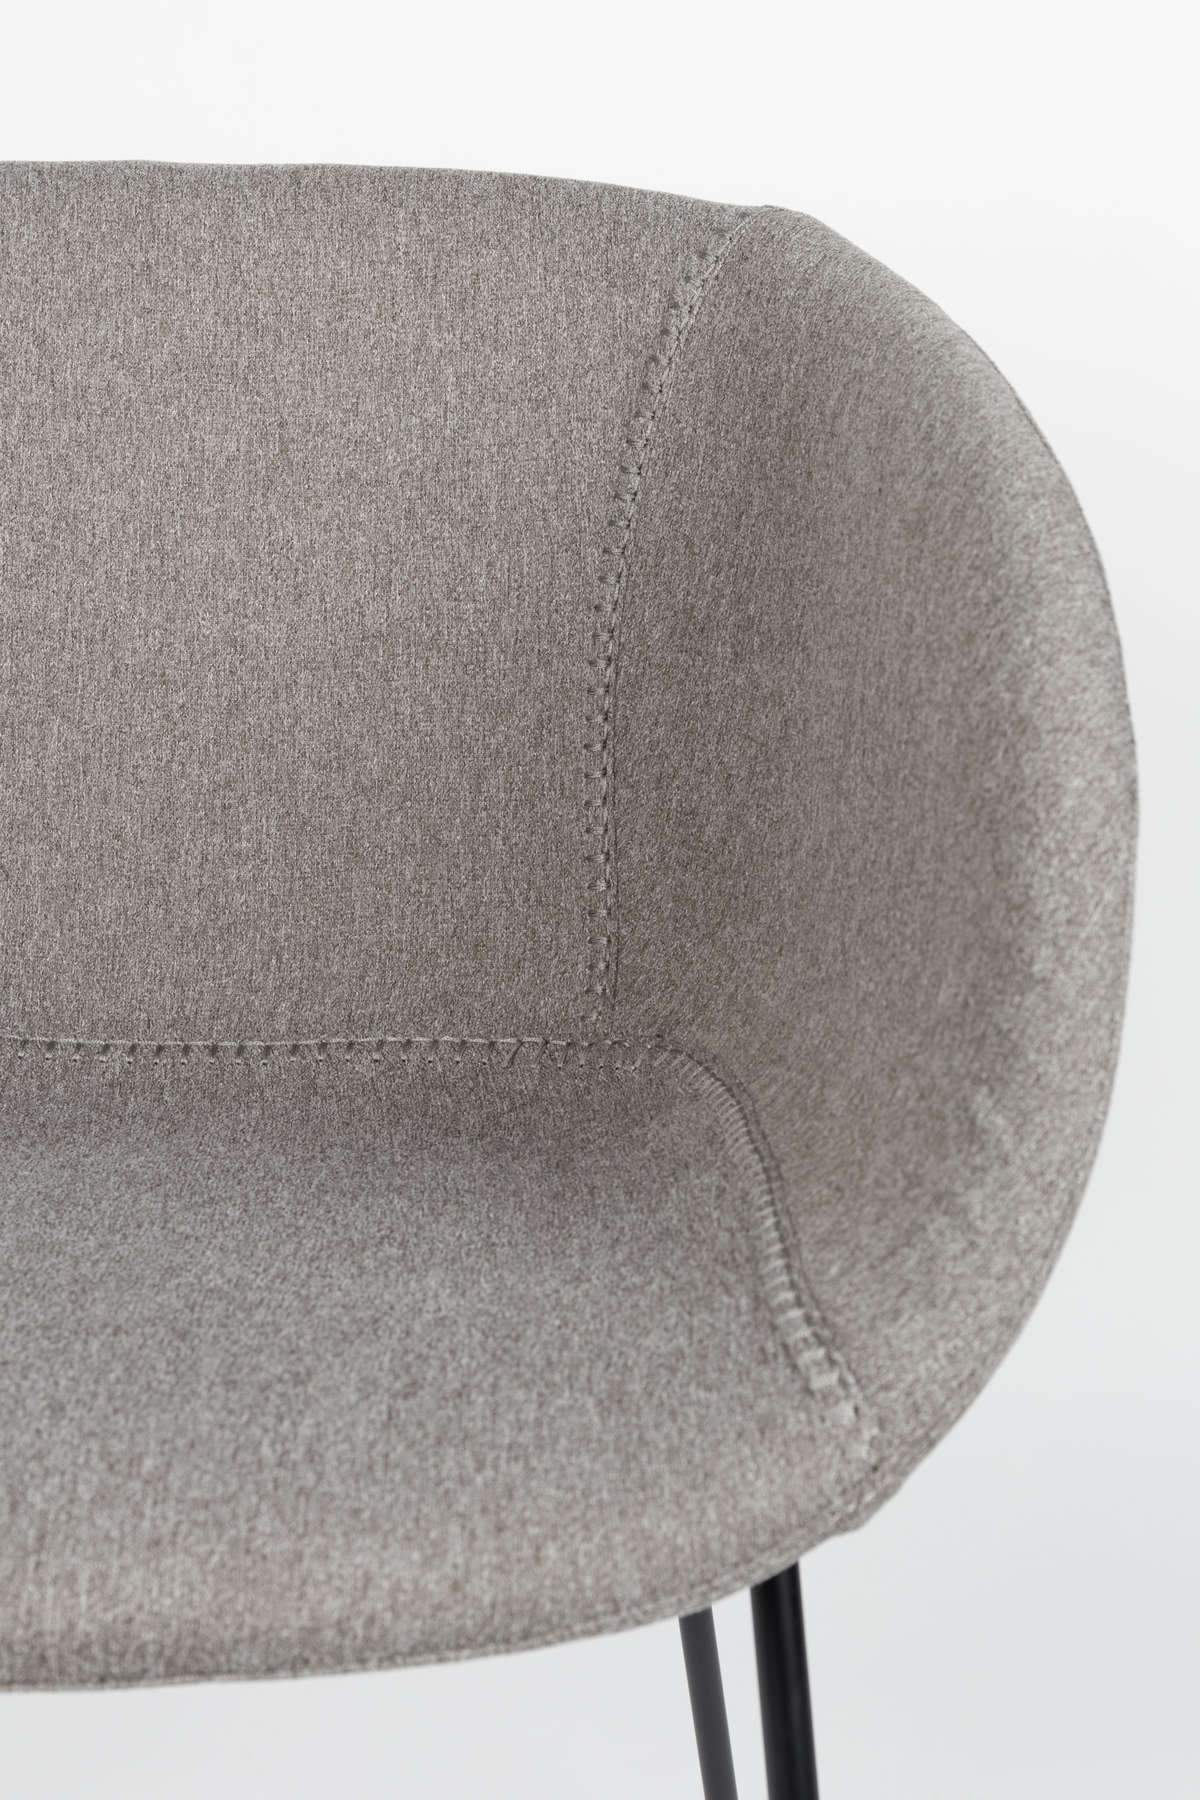 Low bar stool FESTON grey, Zuiver, Eye on Design